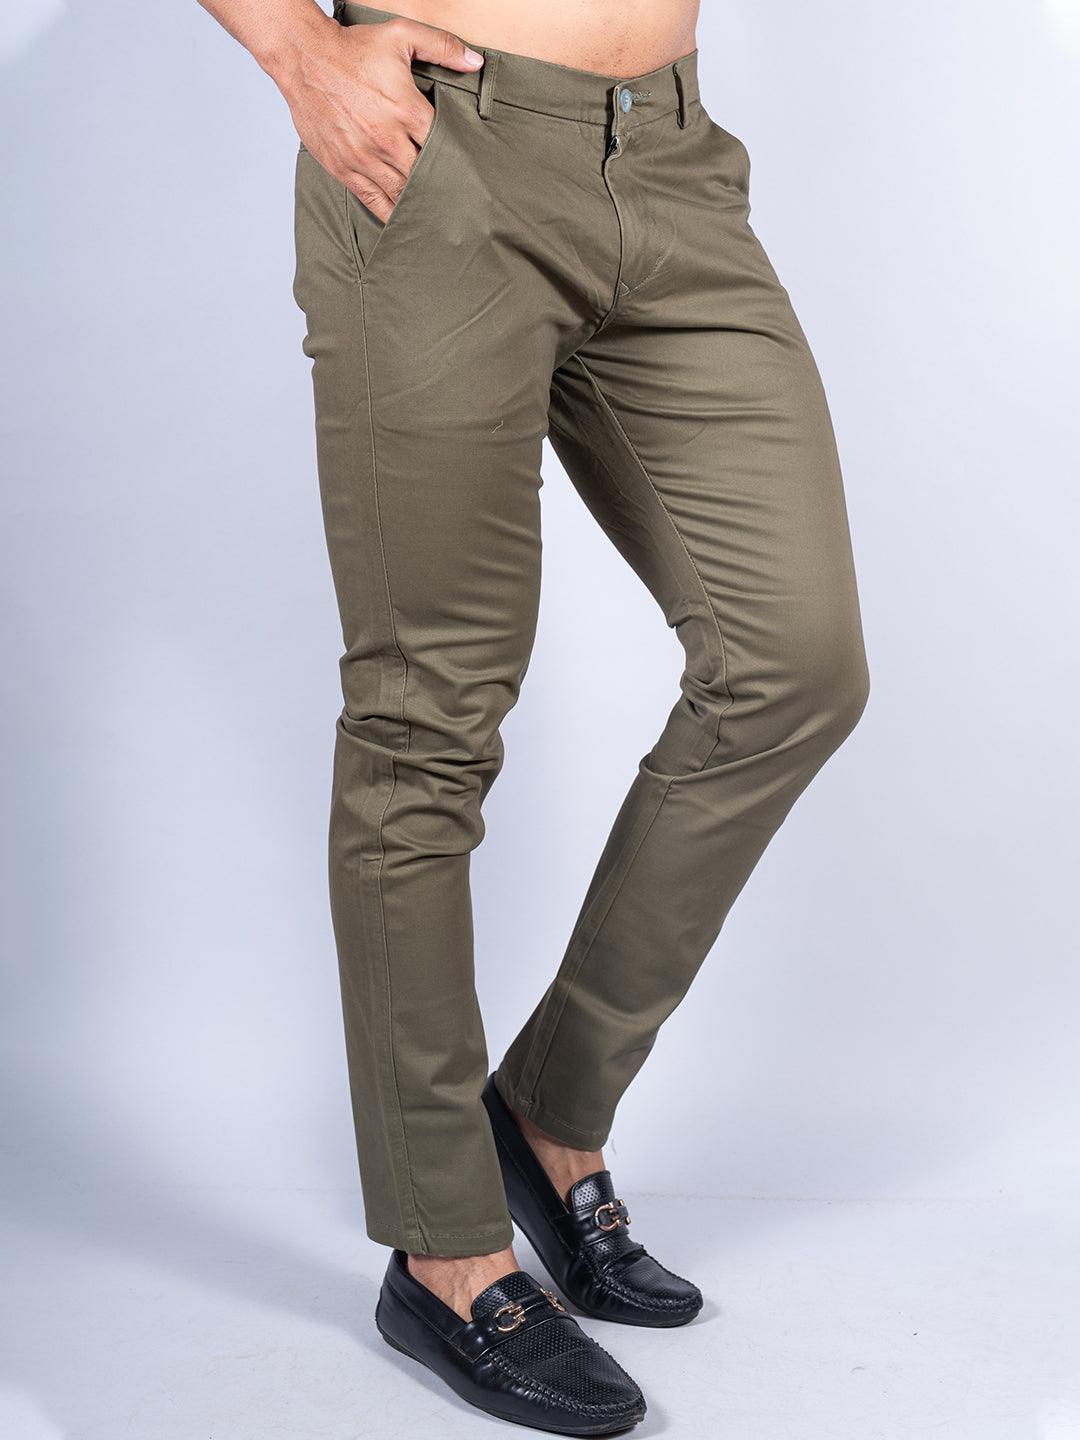 Buy SREY Men's Slim Fit Black and Khaki Coloured Polyester Combo Pants.(Black_Khaki_28)  at Amazon.in